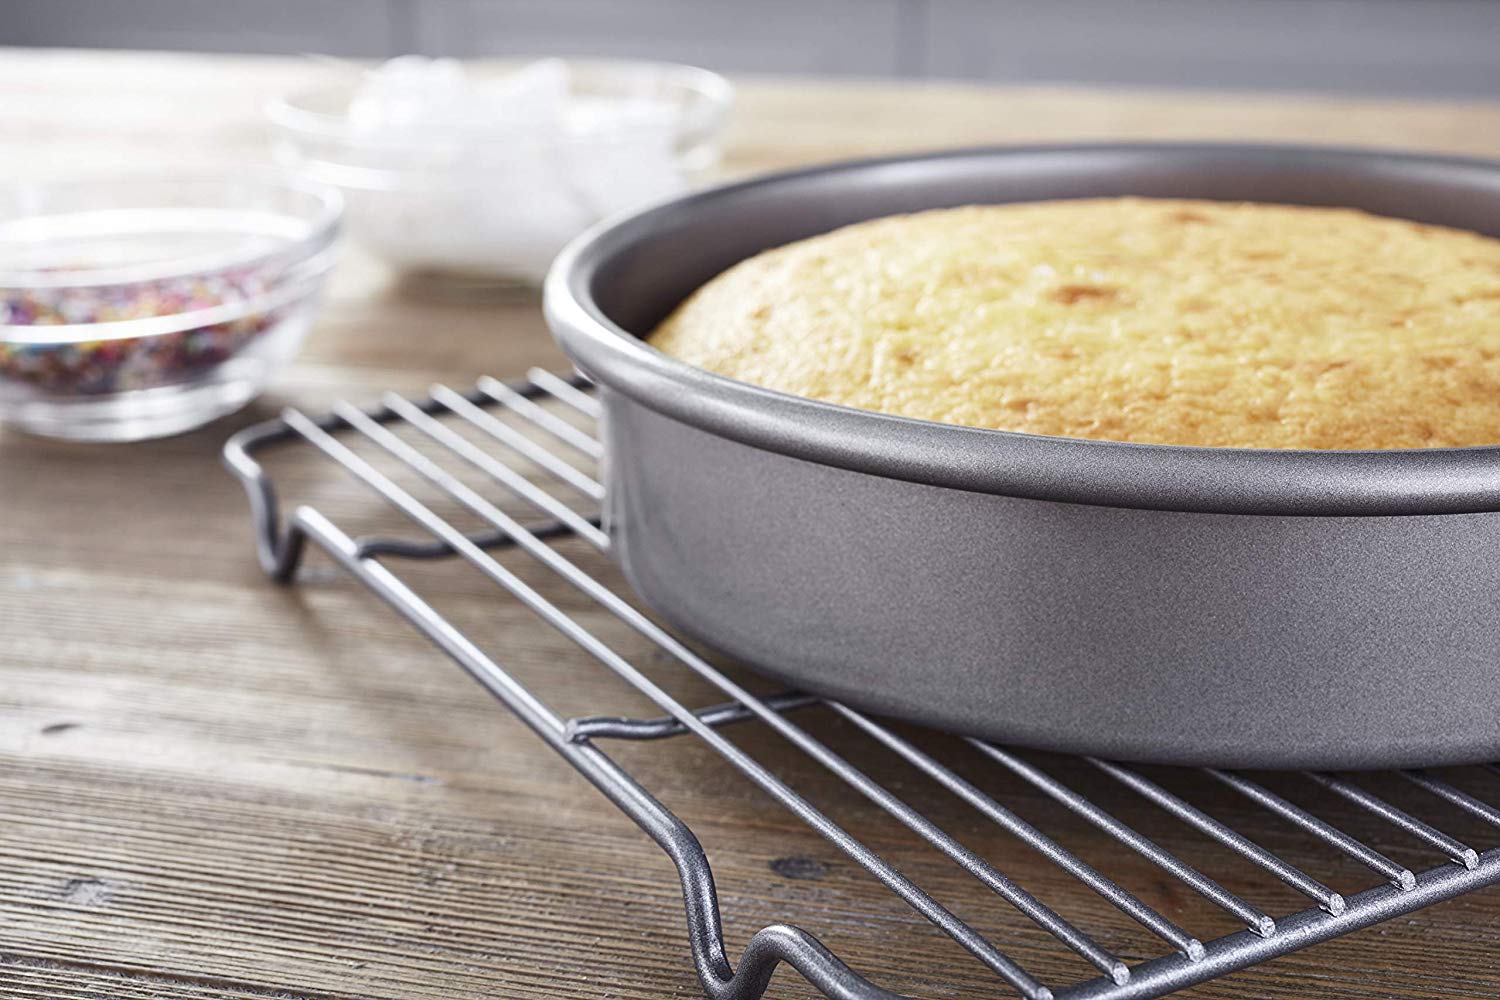 Professional Non-Stick Round Cake Pan, 9-inch